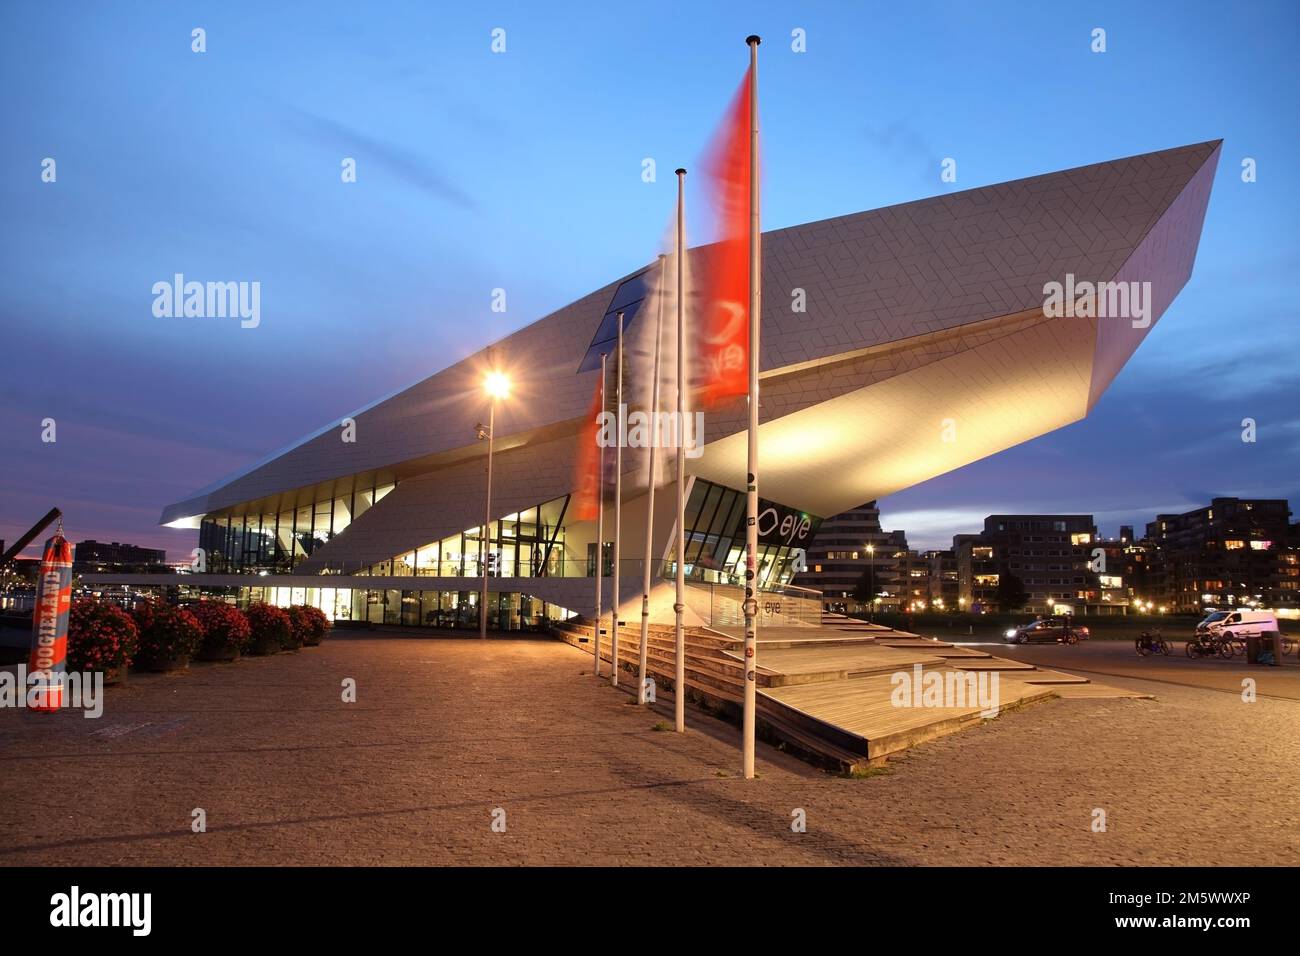 The EYE Filmmuseum, Amsterdam, Netherlands. Stock Photo